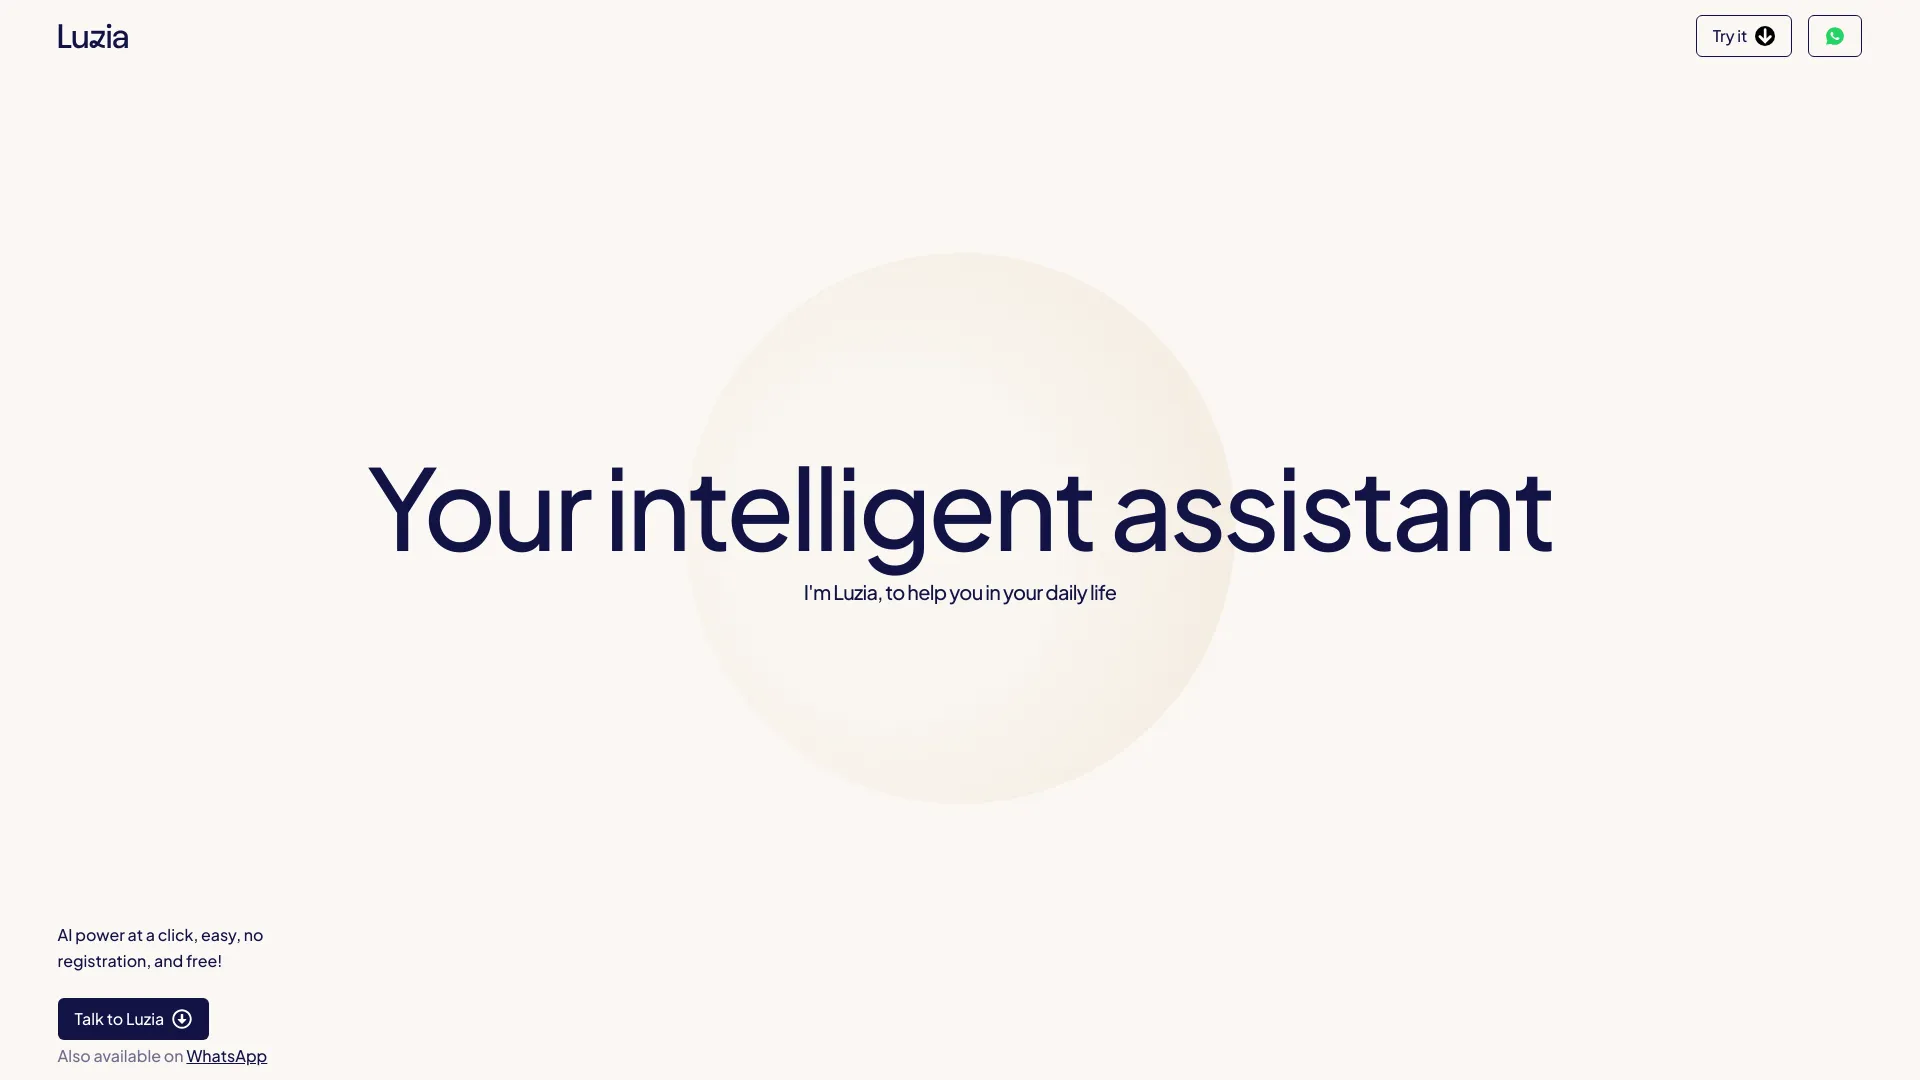 
Luzia: Your intelligent assistant at a click
